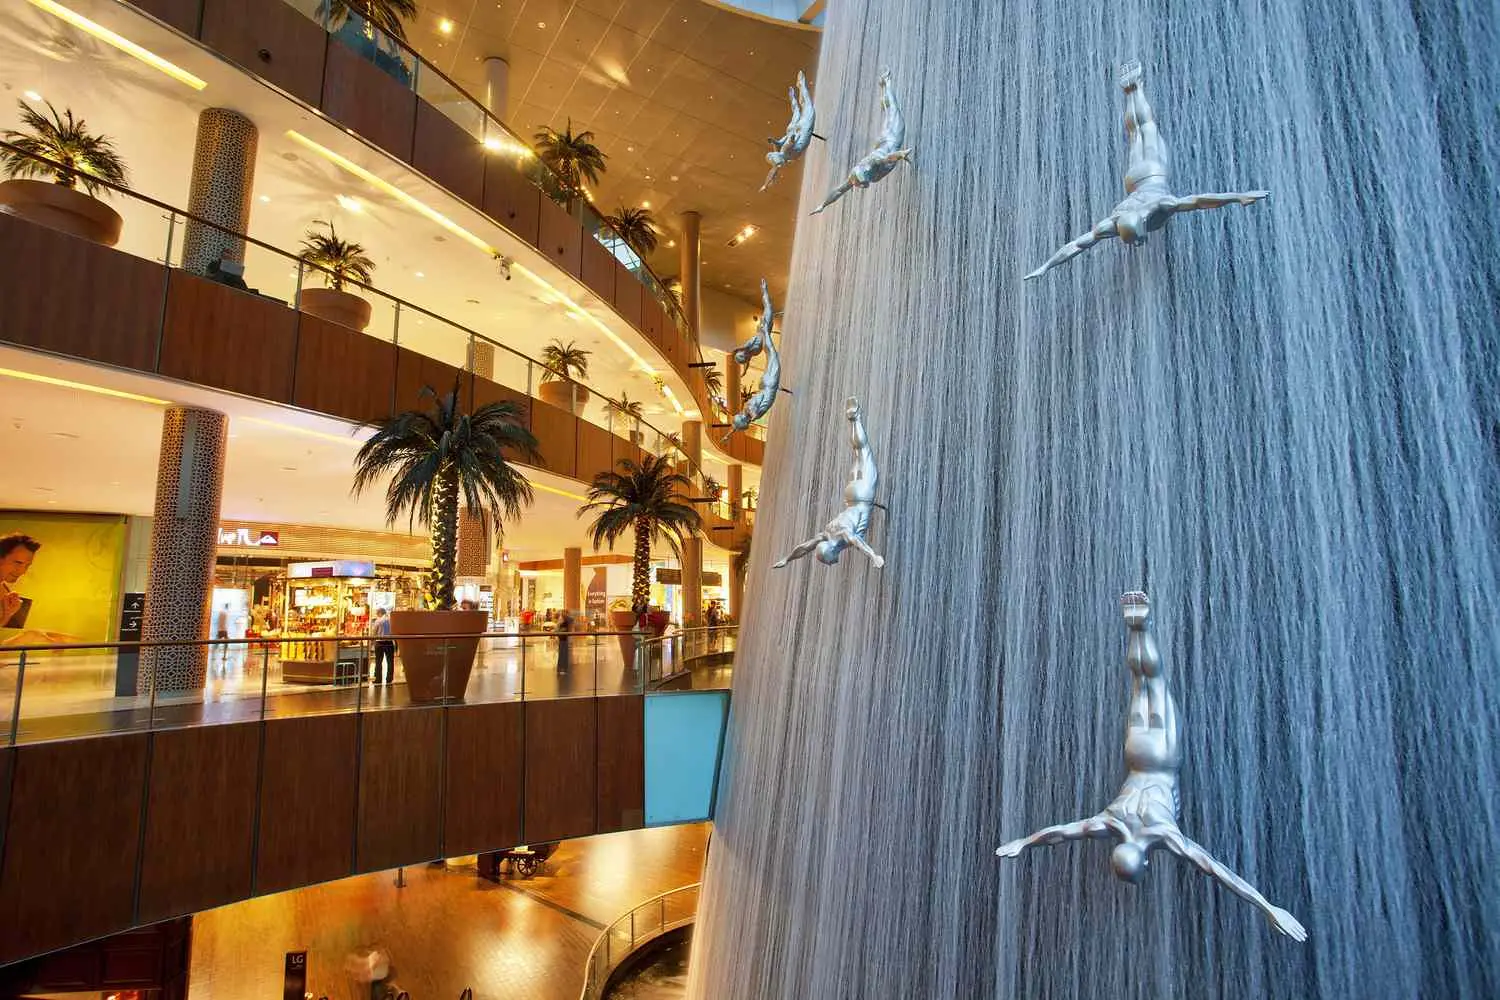 Top Shopping Malls To Visit In Dubai